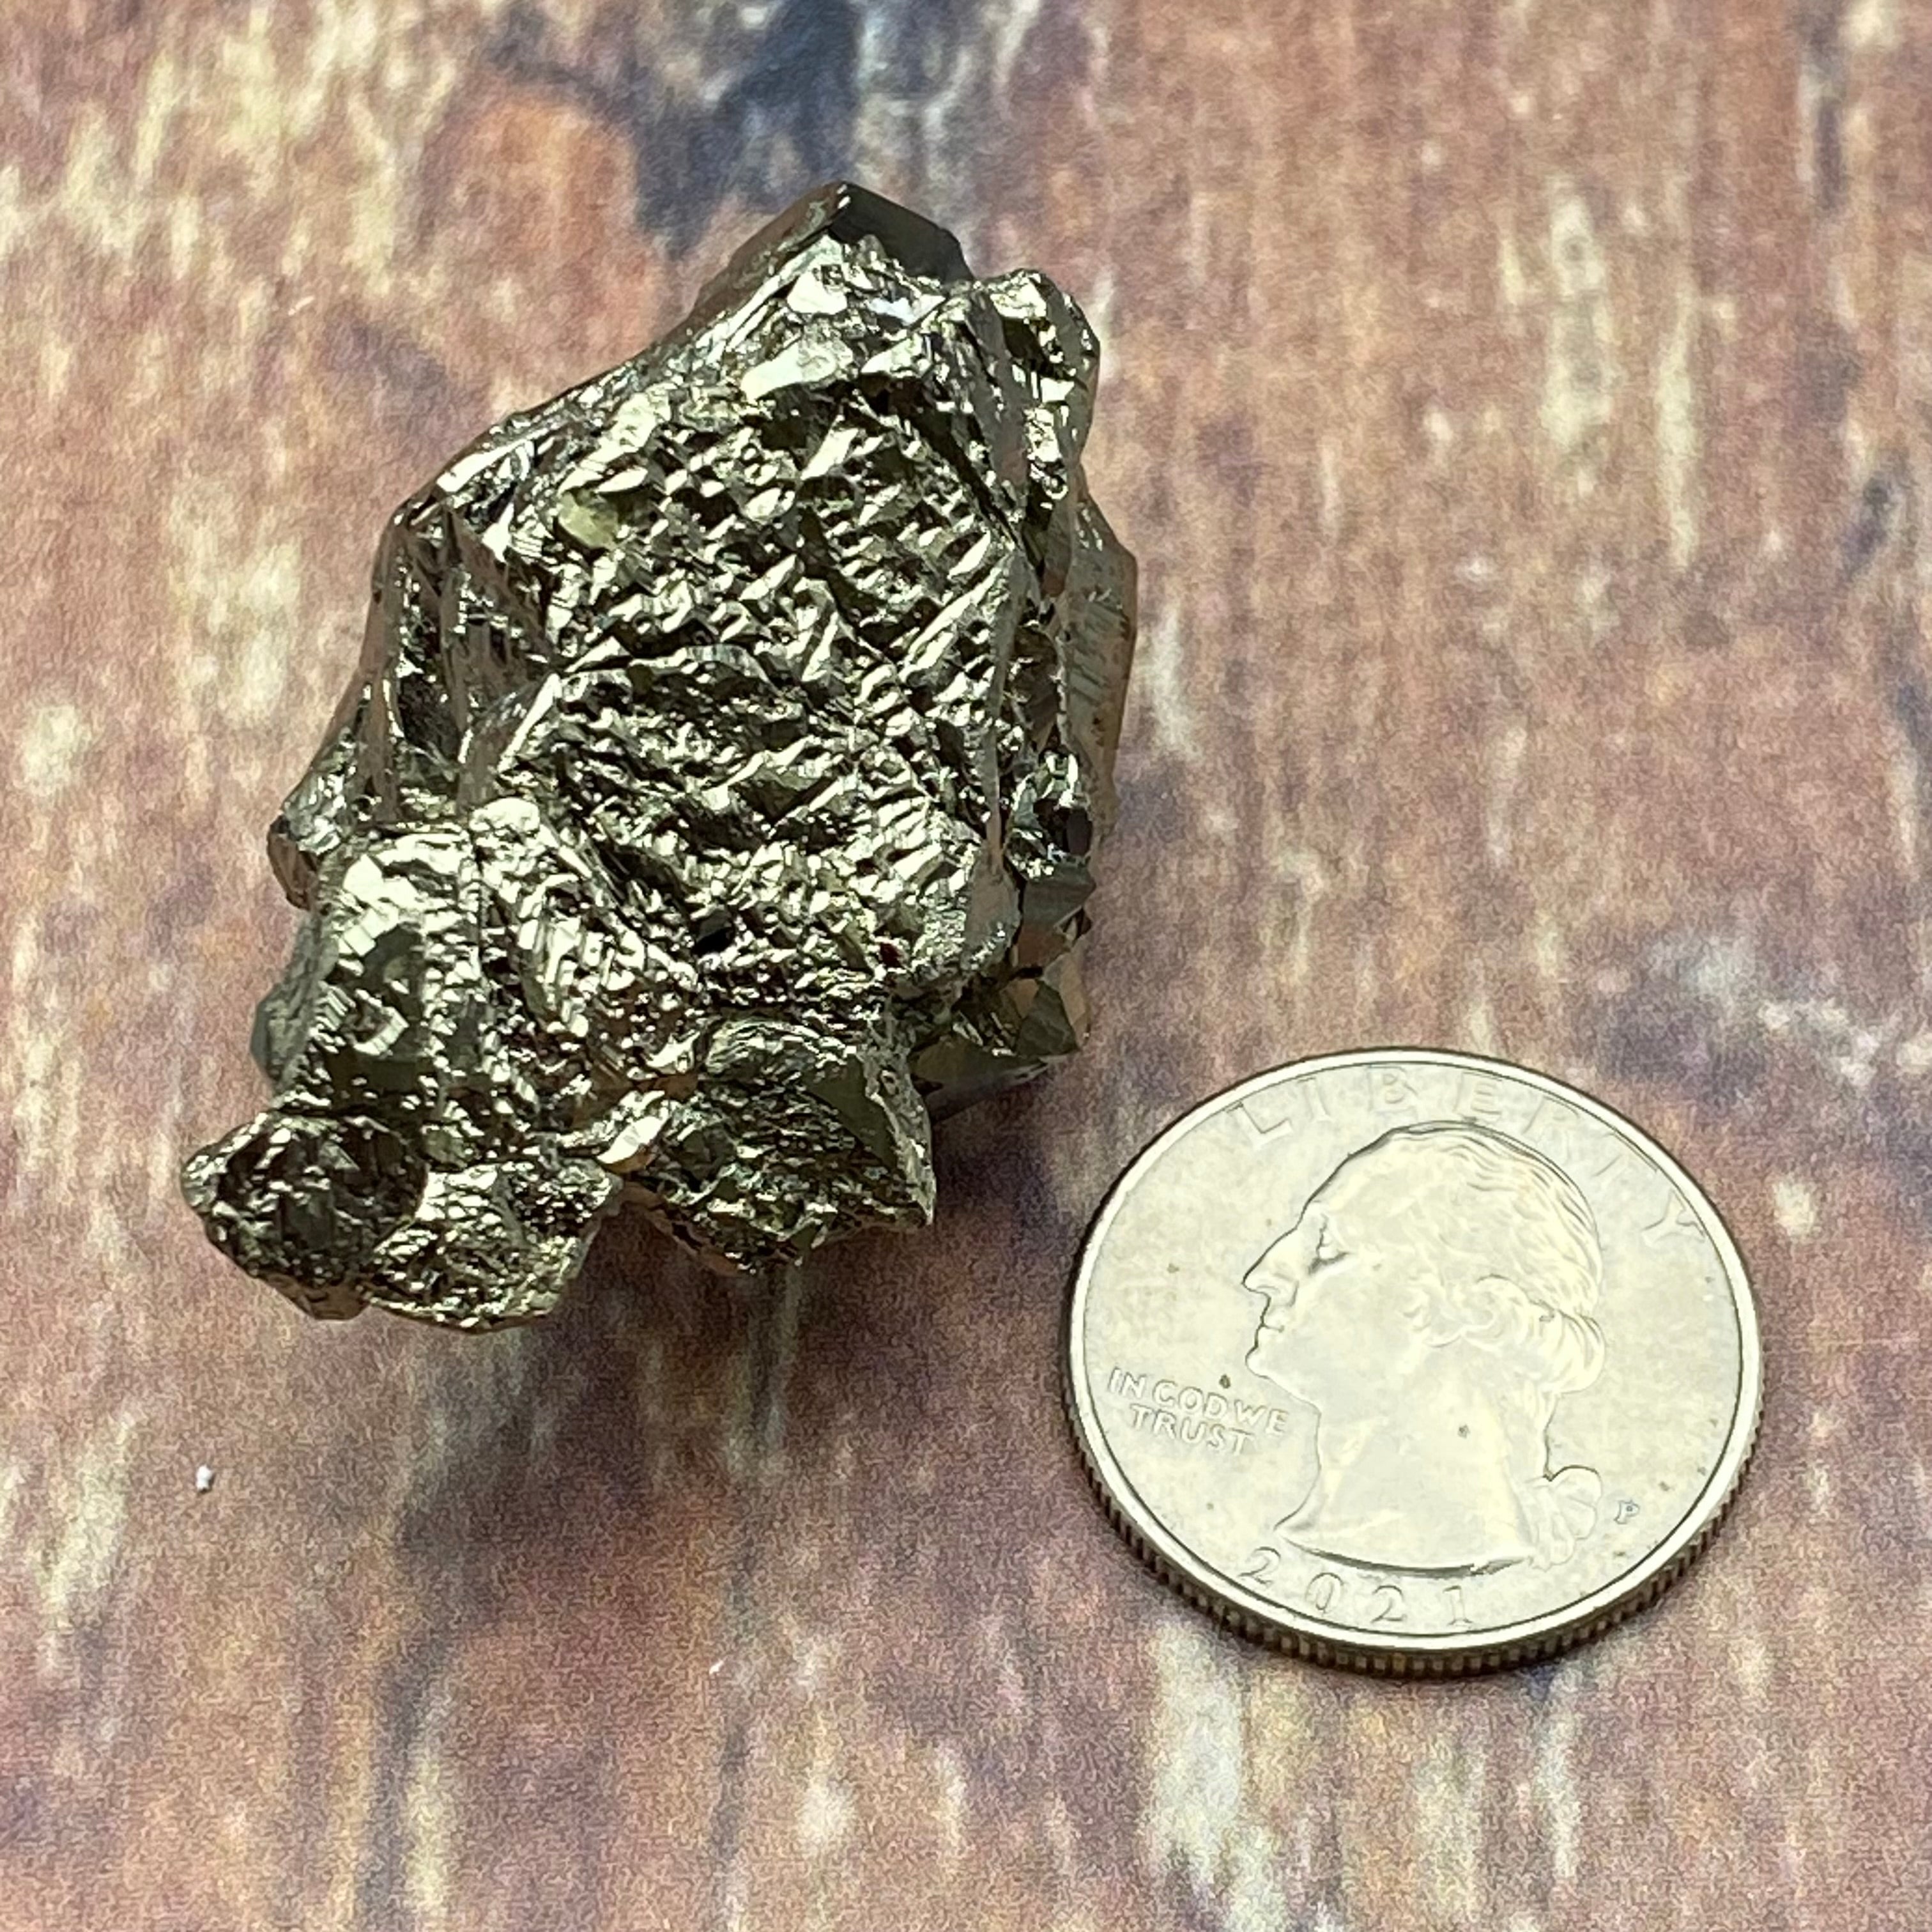 Peruvian Pyrite Crystal - 023